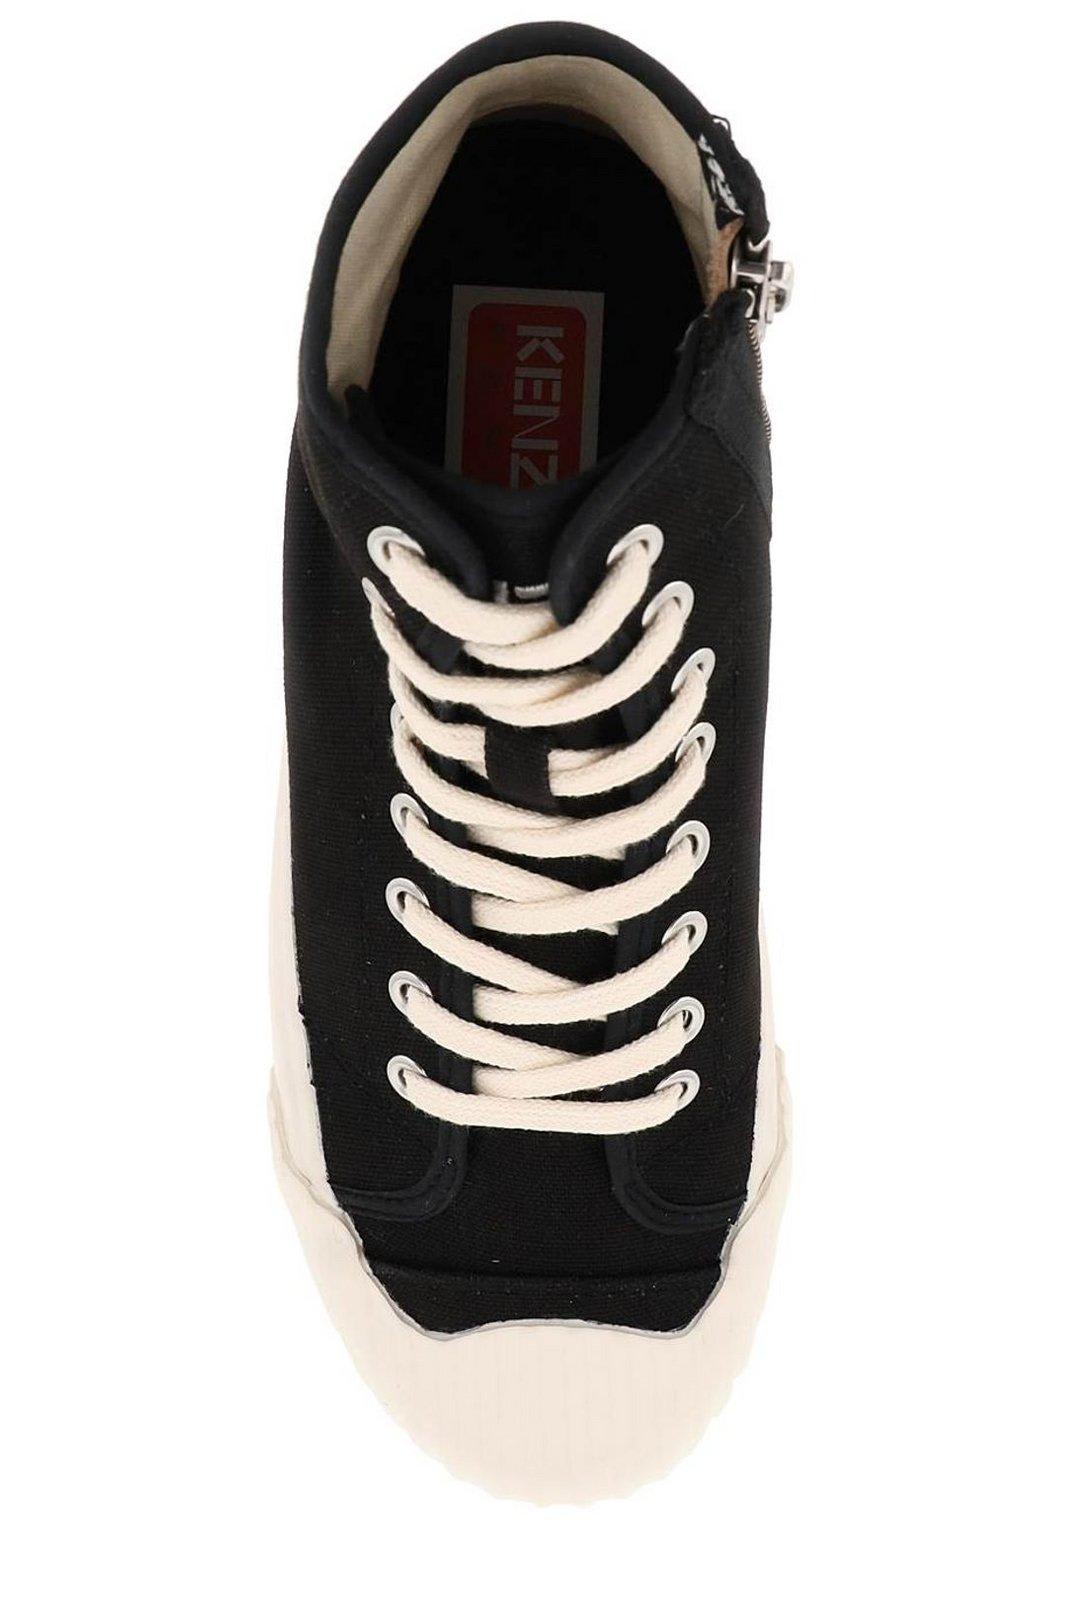 Shop Kenzo School High-top Sneakers In Black/white